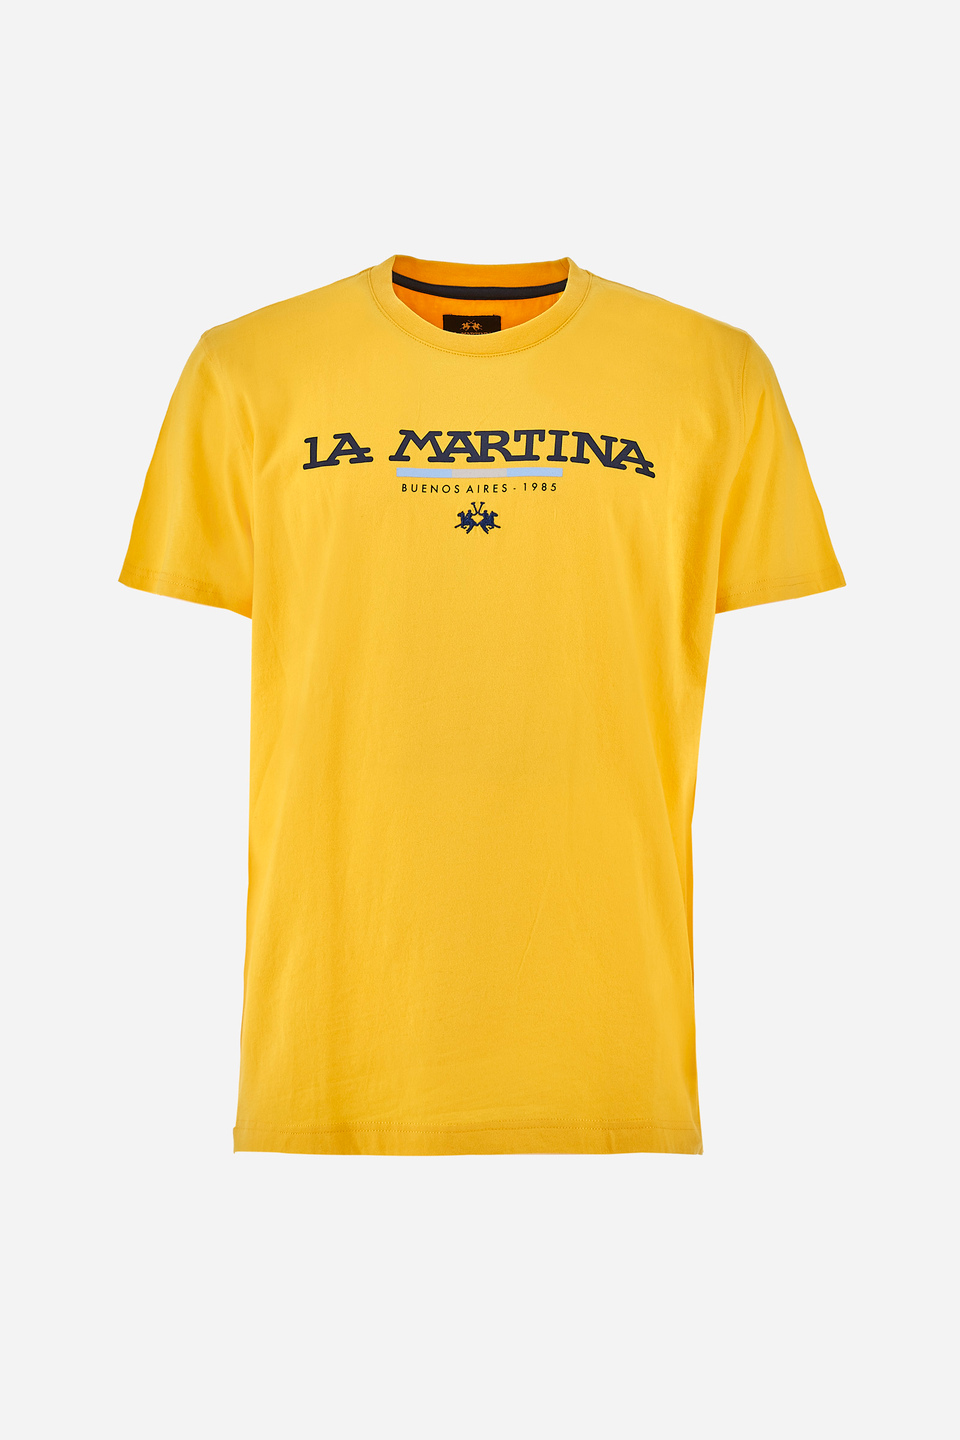 Tee-shirt homme coupe classique - Winford | La Martina - Official Online Shop